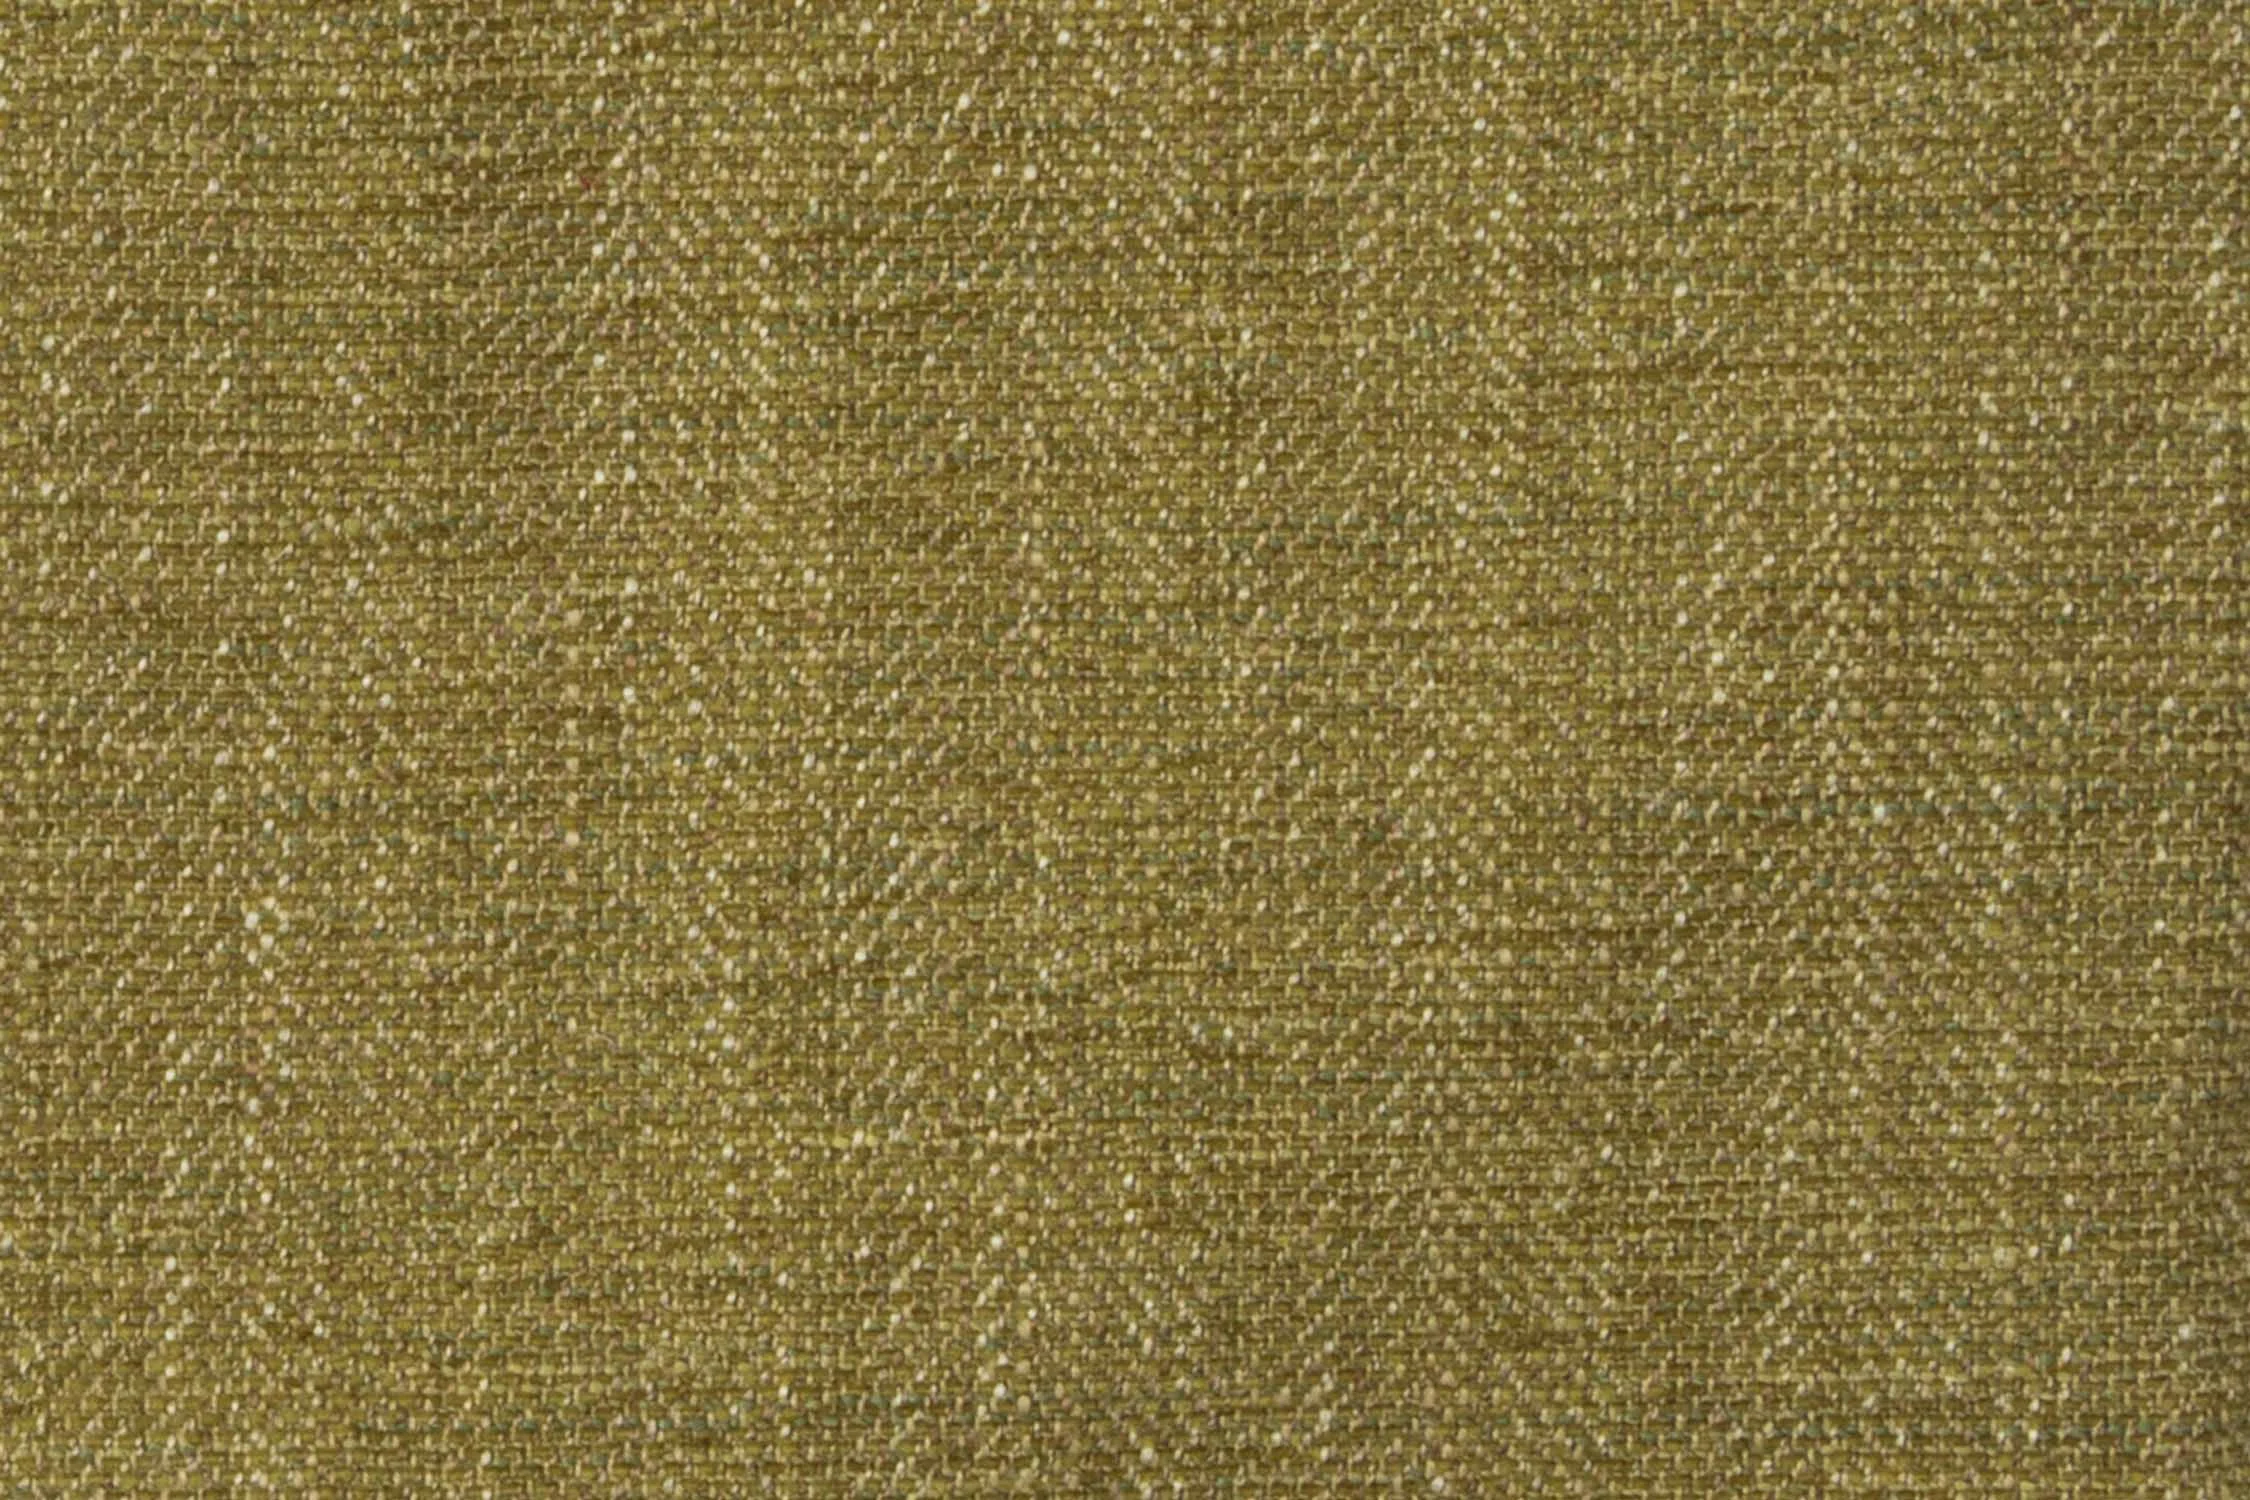 Sofa fabric solid